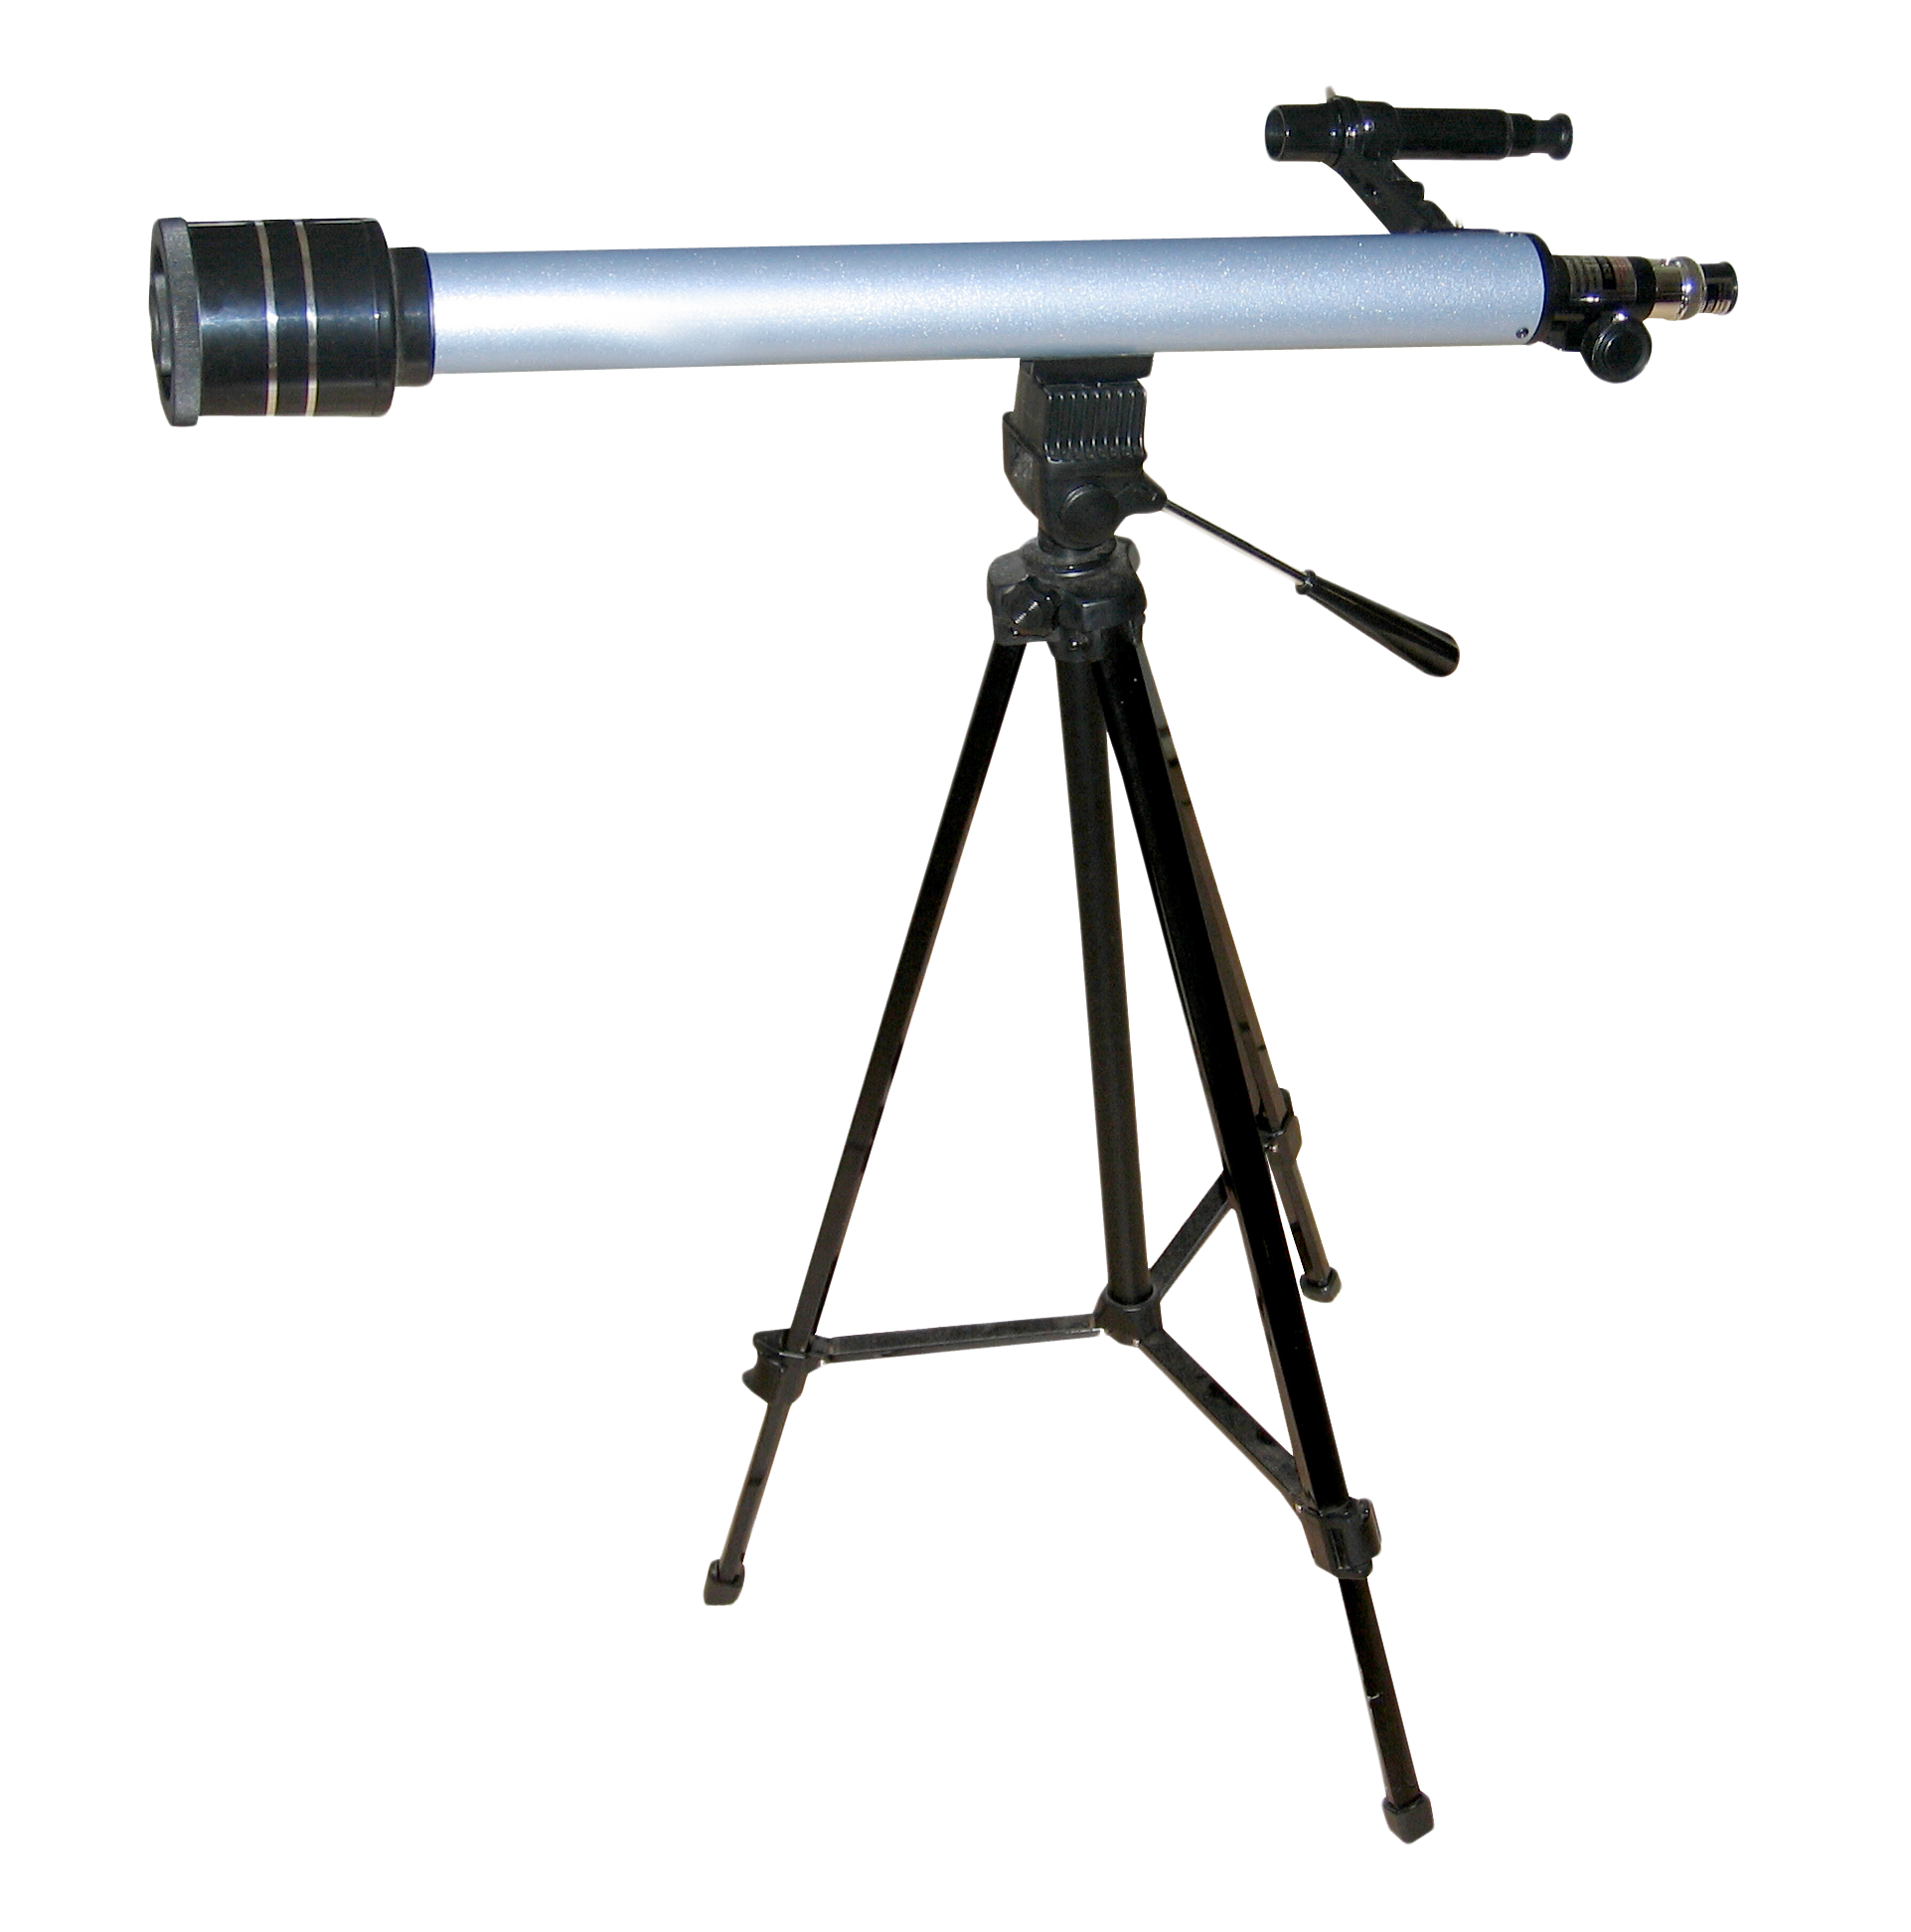 A Telescope On A Tripod